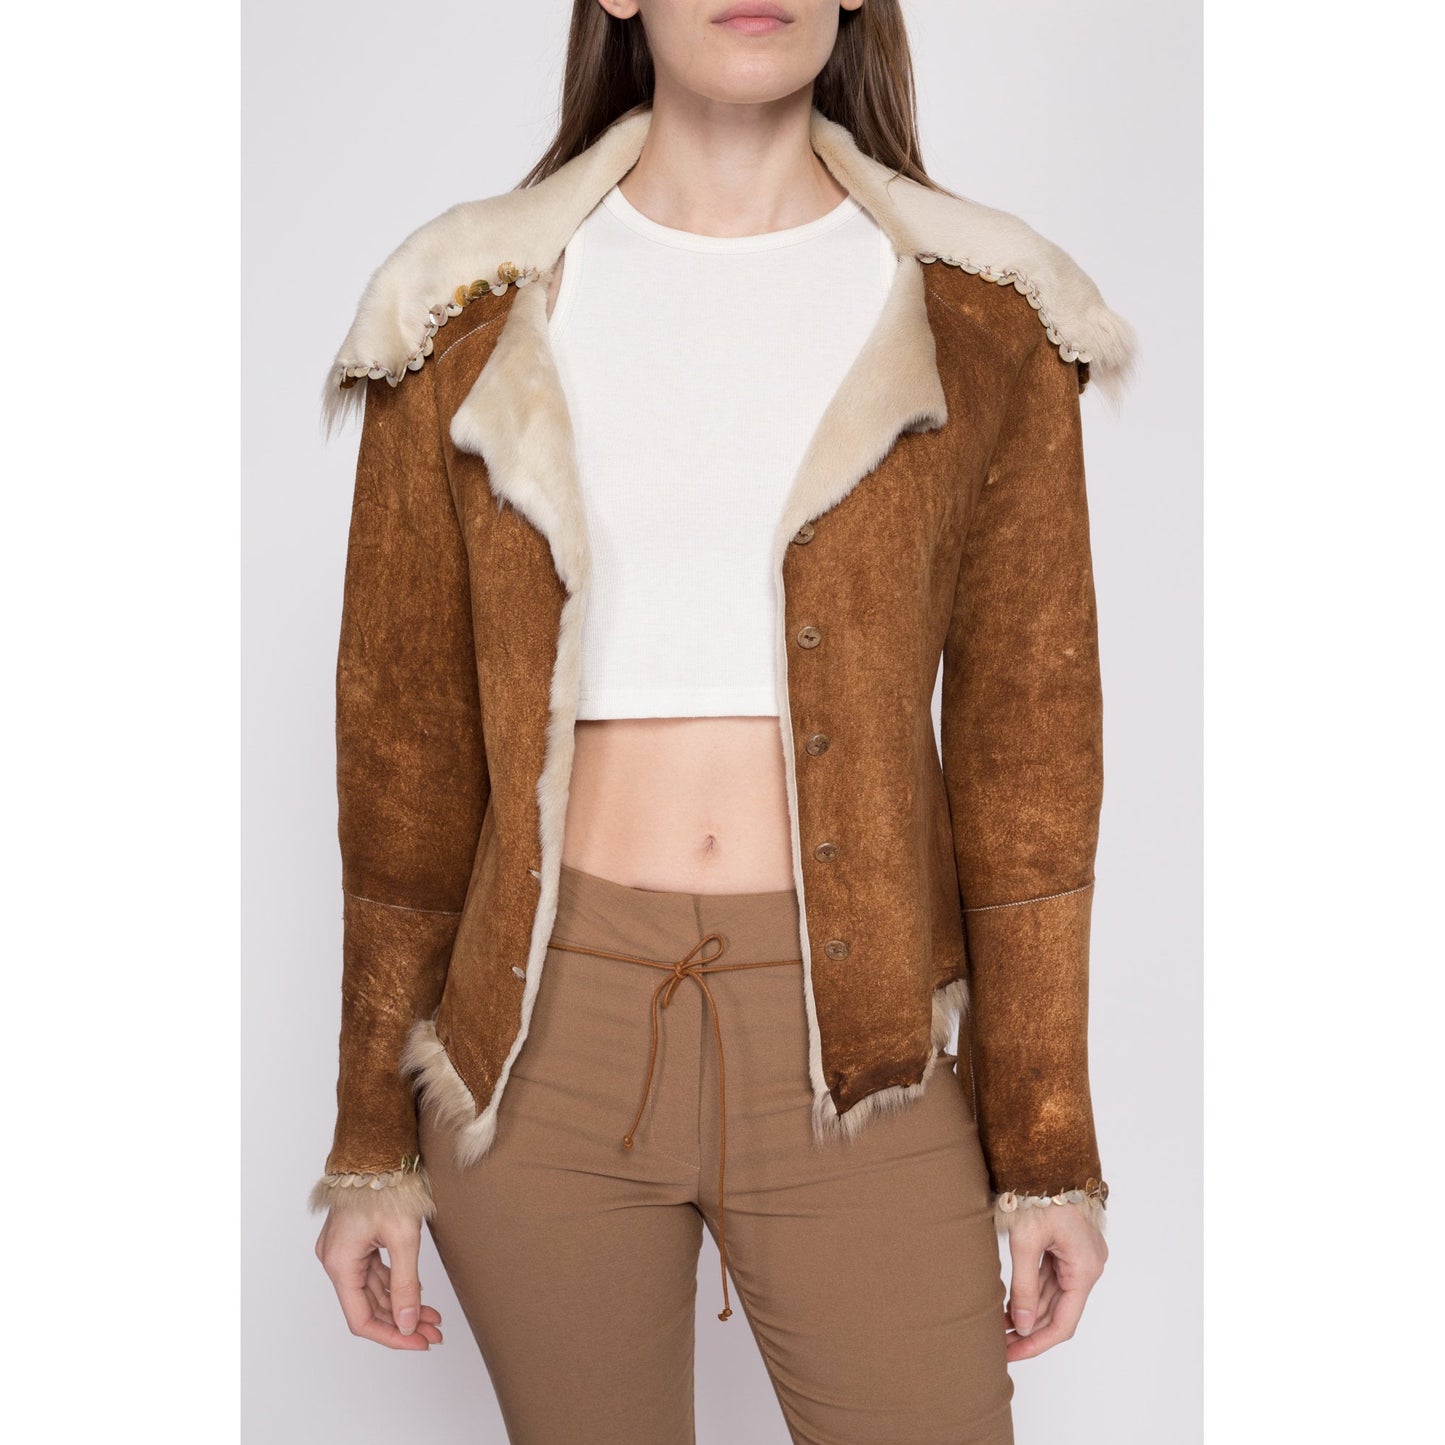 Vintage Maxfield Parrish Cowhide Leather Jacket - Small | 90s Y2K Hair On Real Fur Western Boho Coat